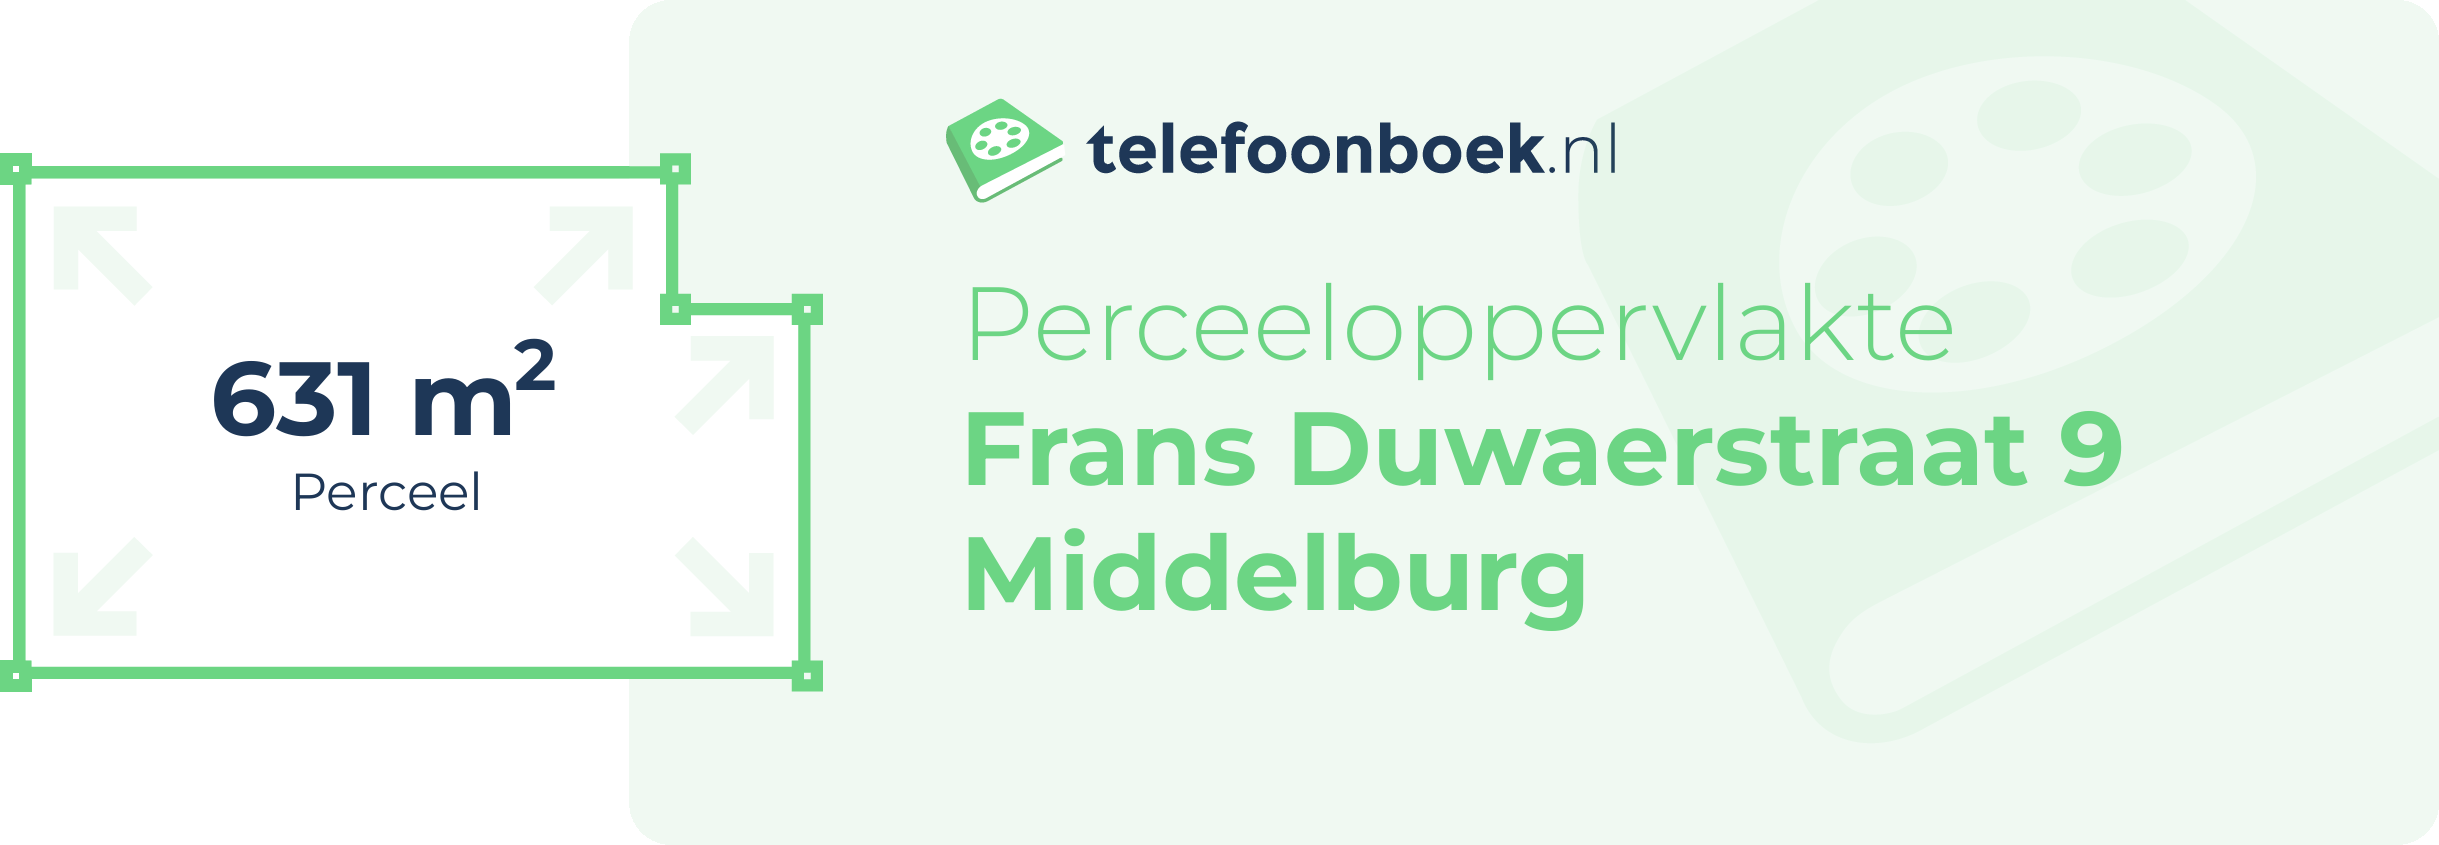 Perceeloppervlakte Frans Duwaerstraat 9 Middelburg